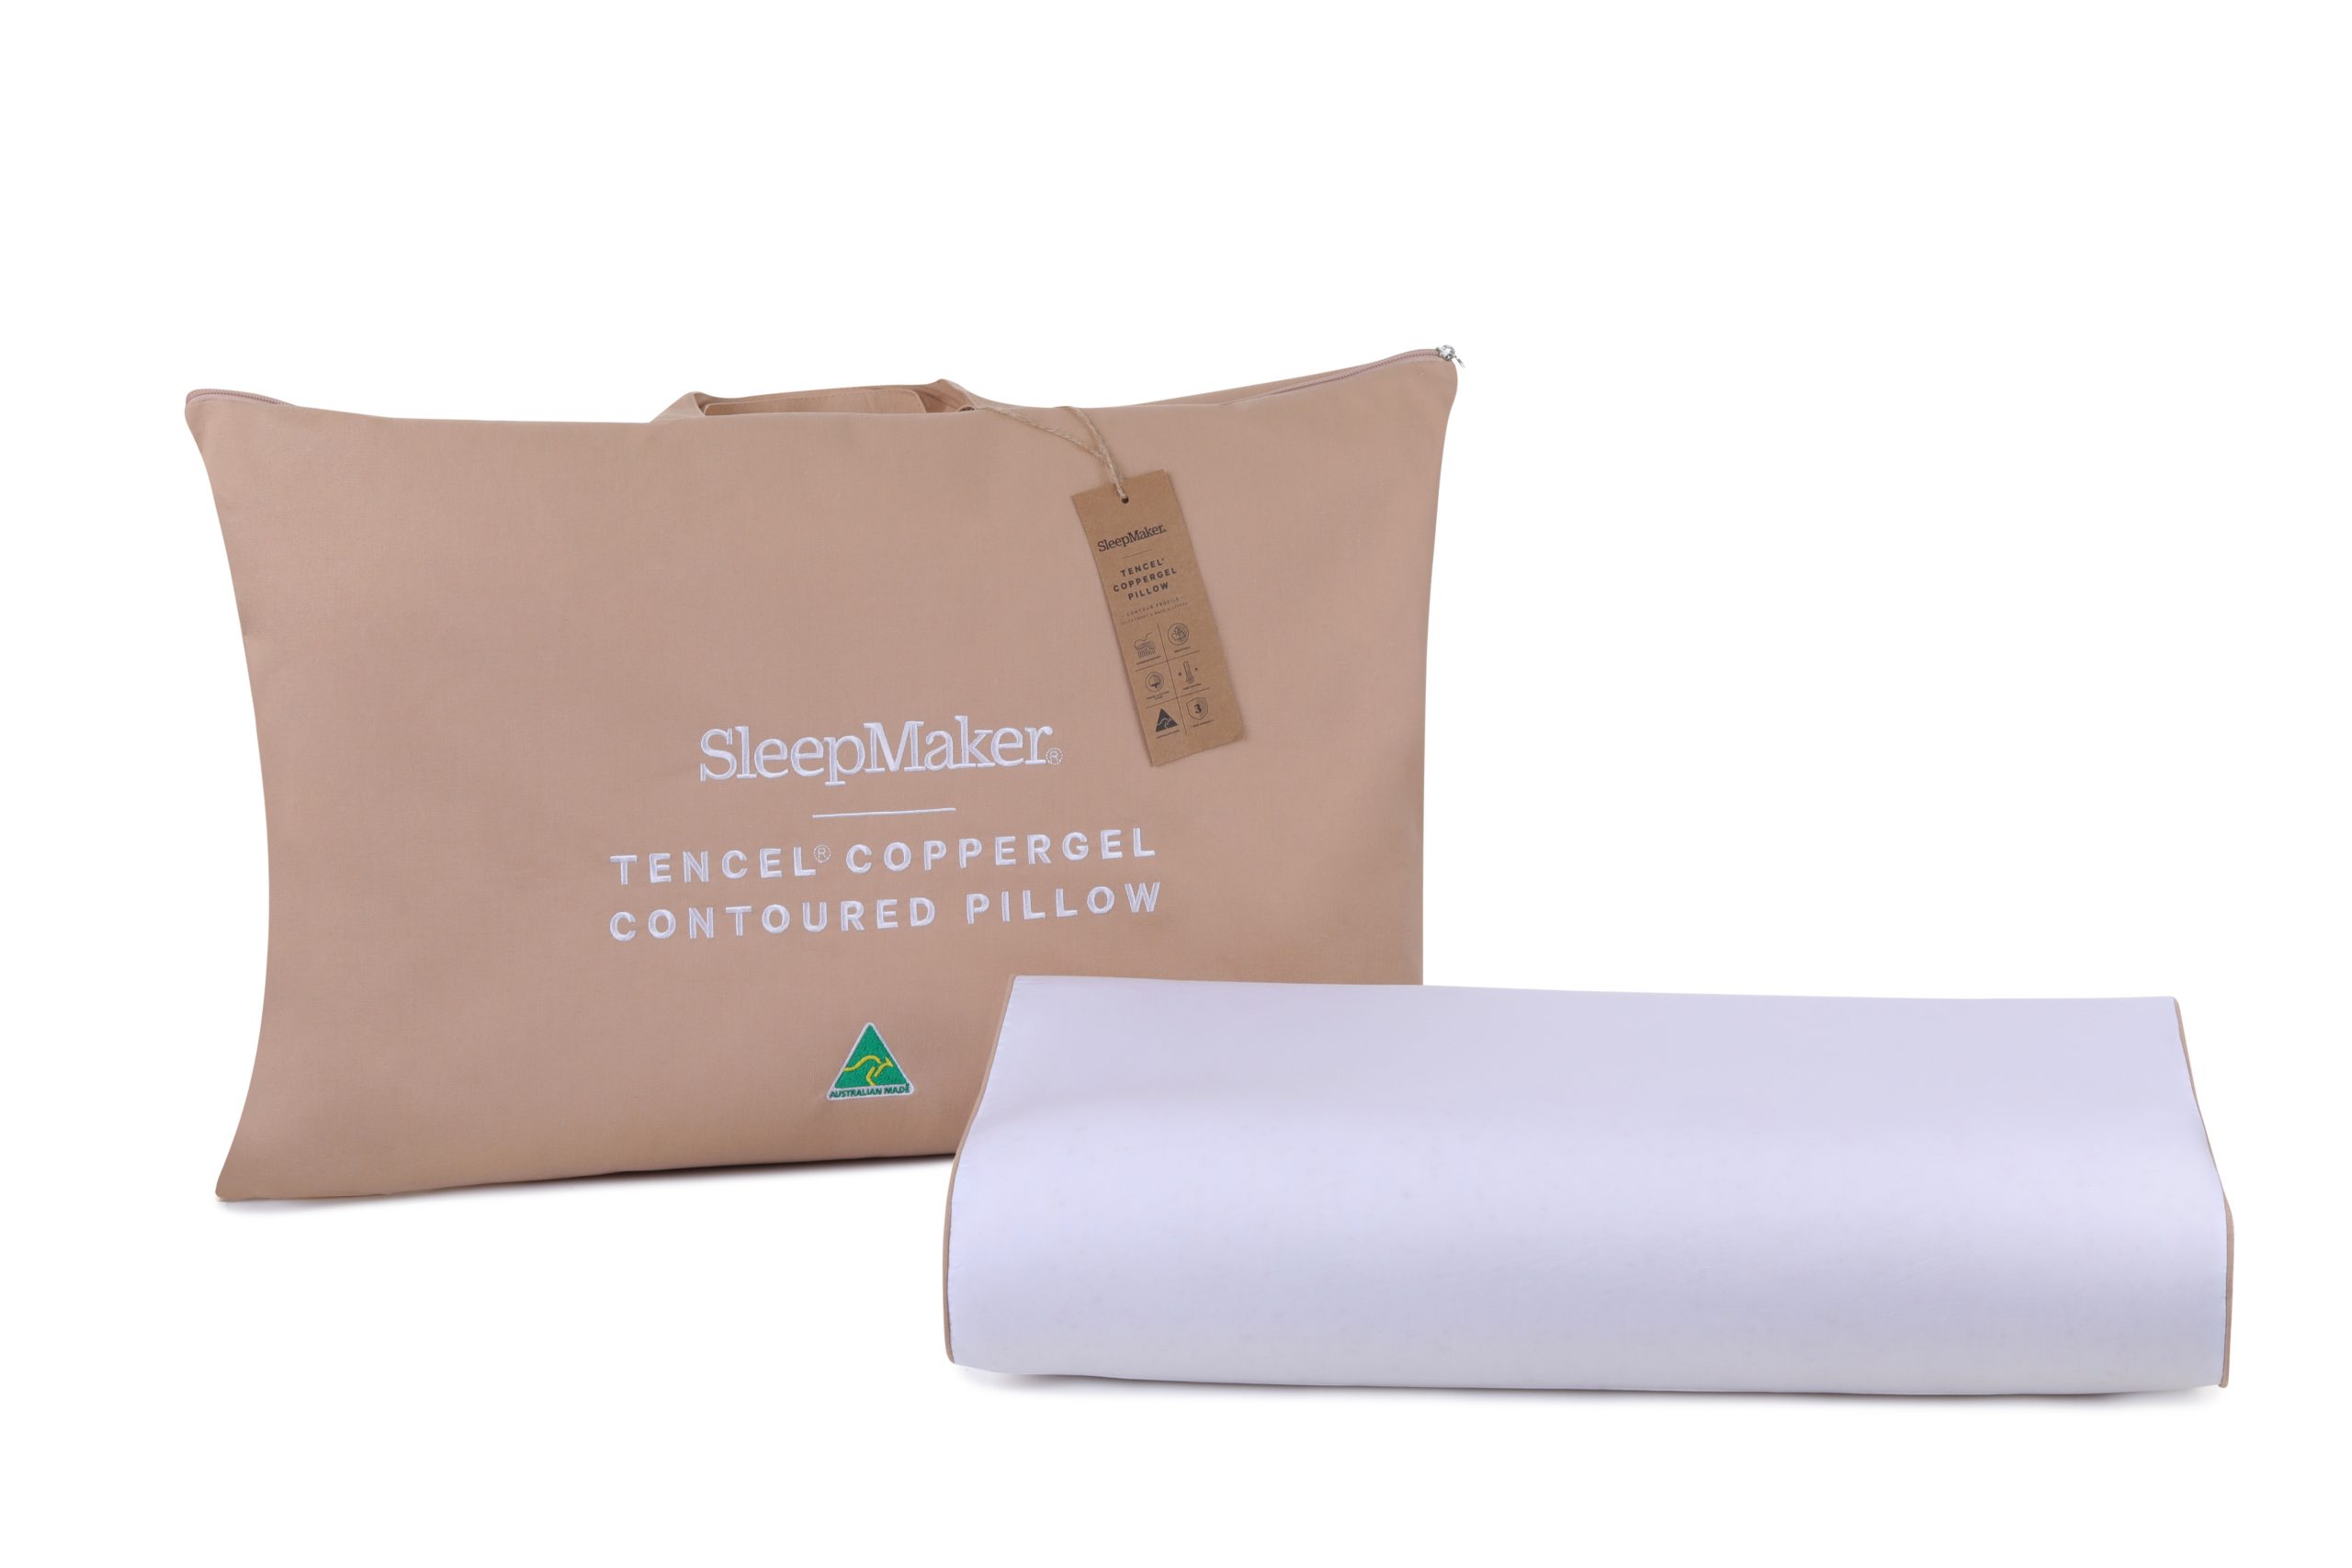 Copper Infused Memory Foam Pillow Online Sale